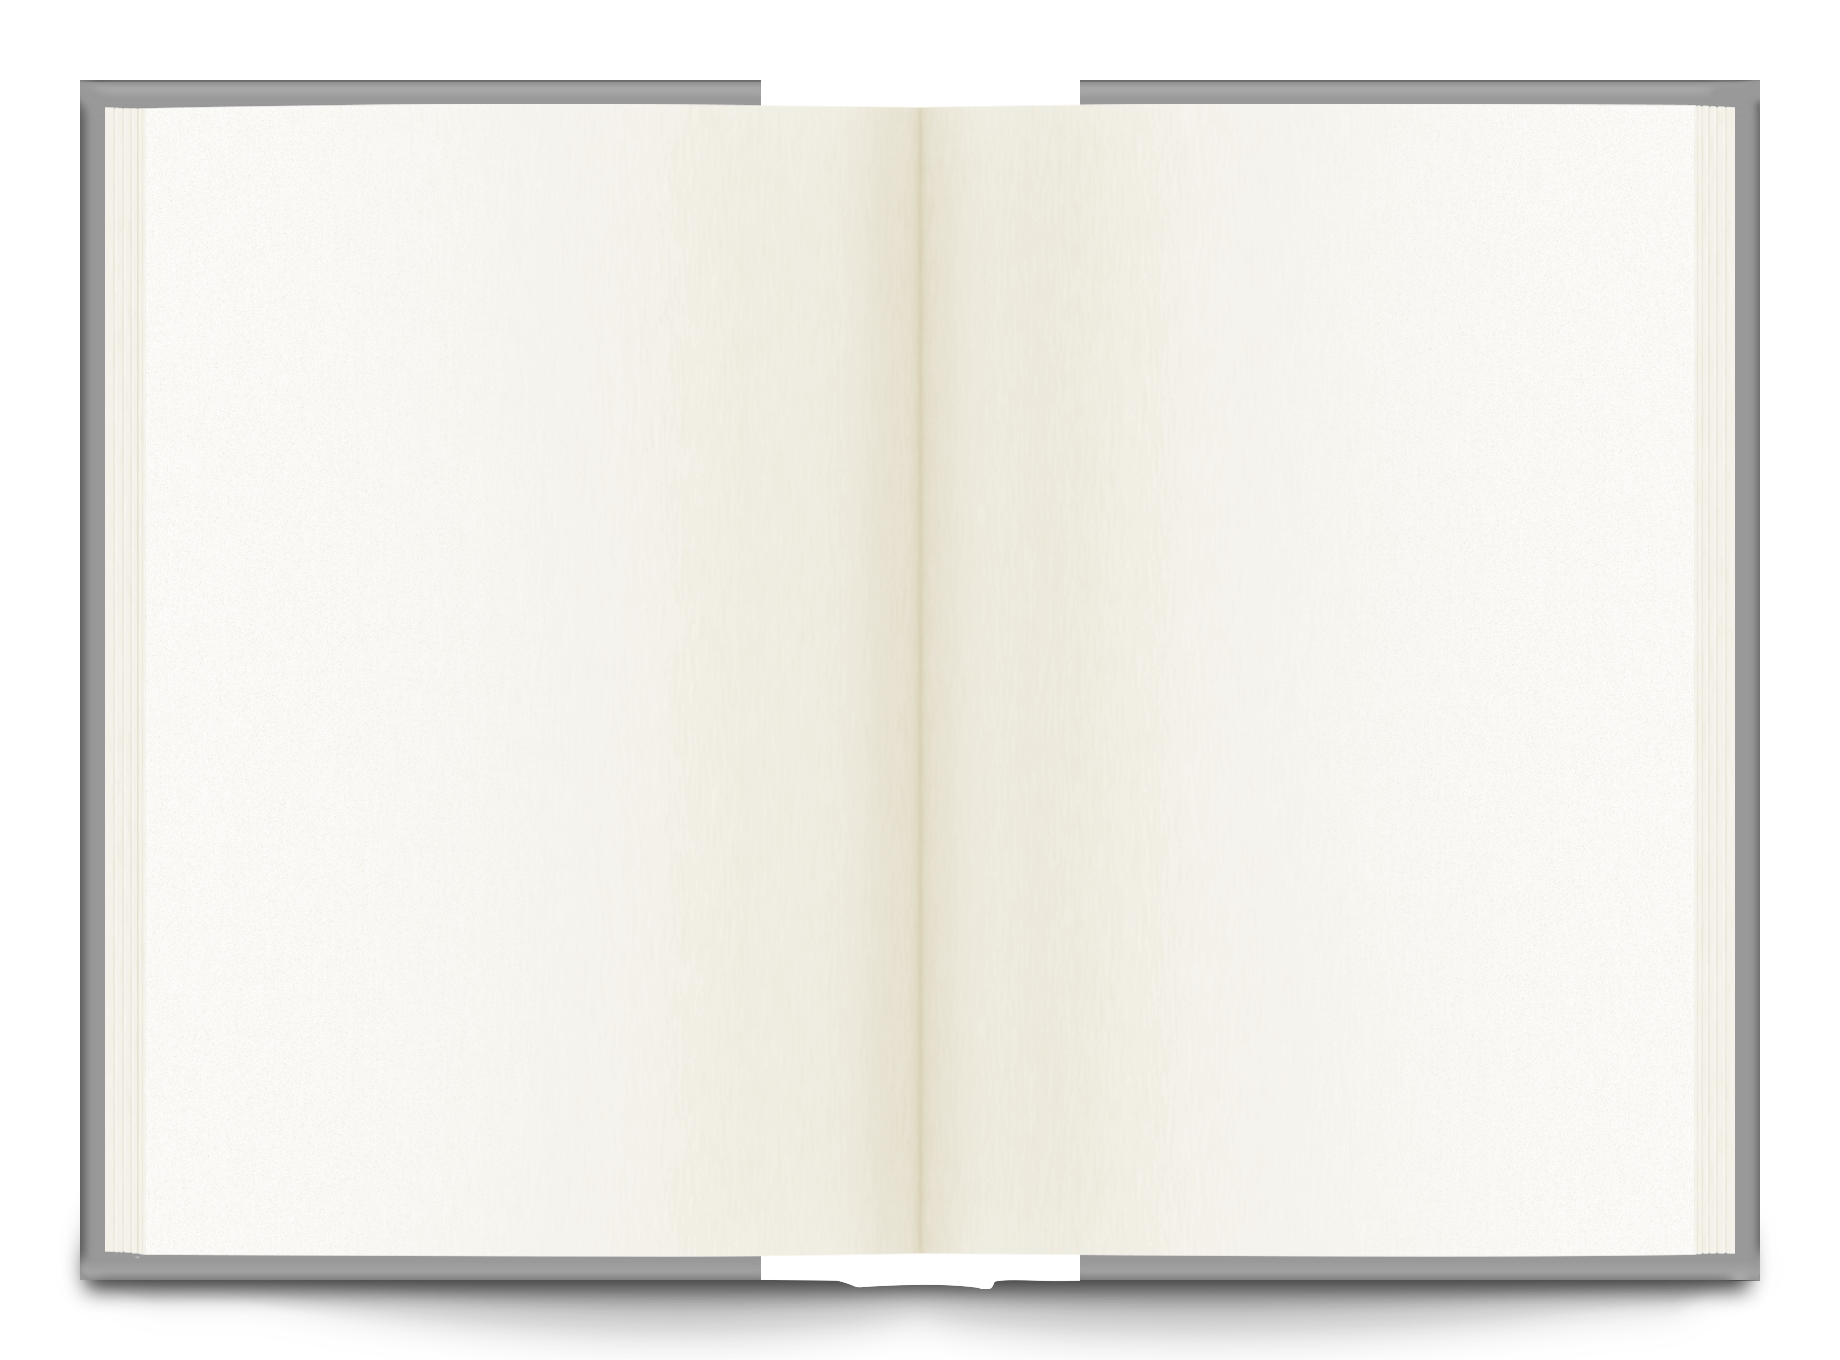  Blank Scrapbook, Long Chipboard Album, Junque Journal